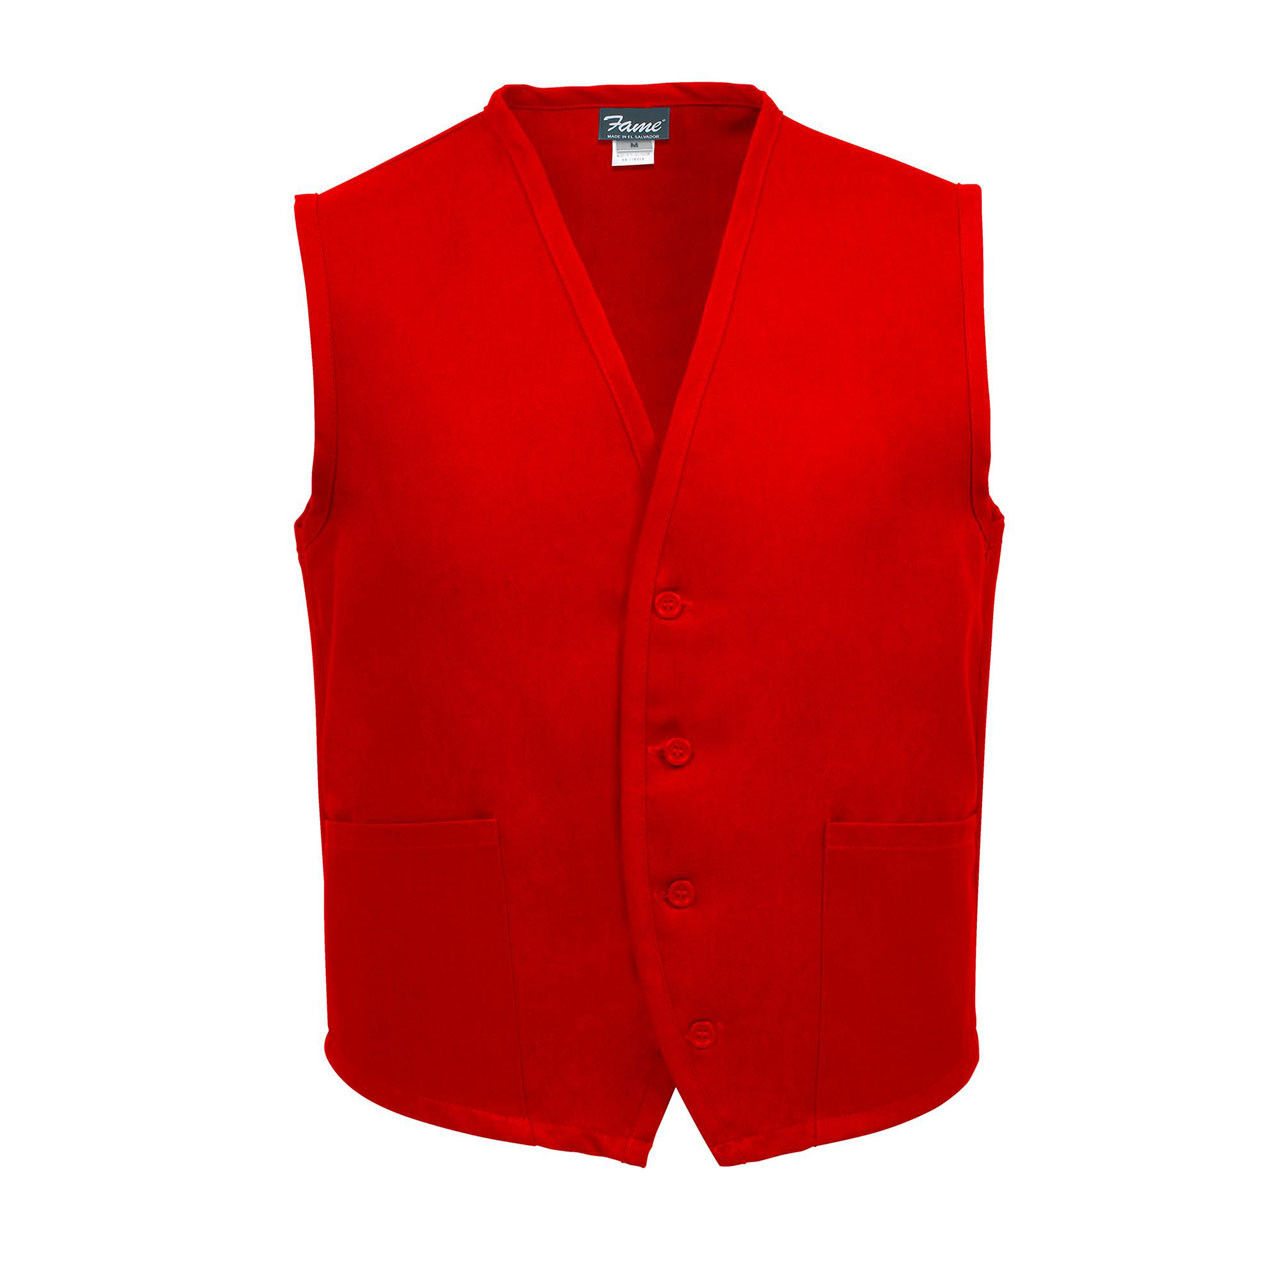 What are the key traits of the red vest, Unisex Uniform Vest, 2 Pocket?